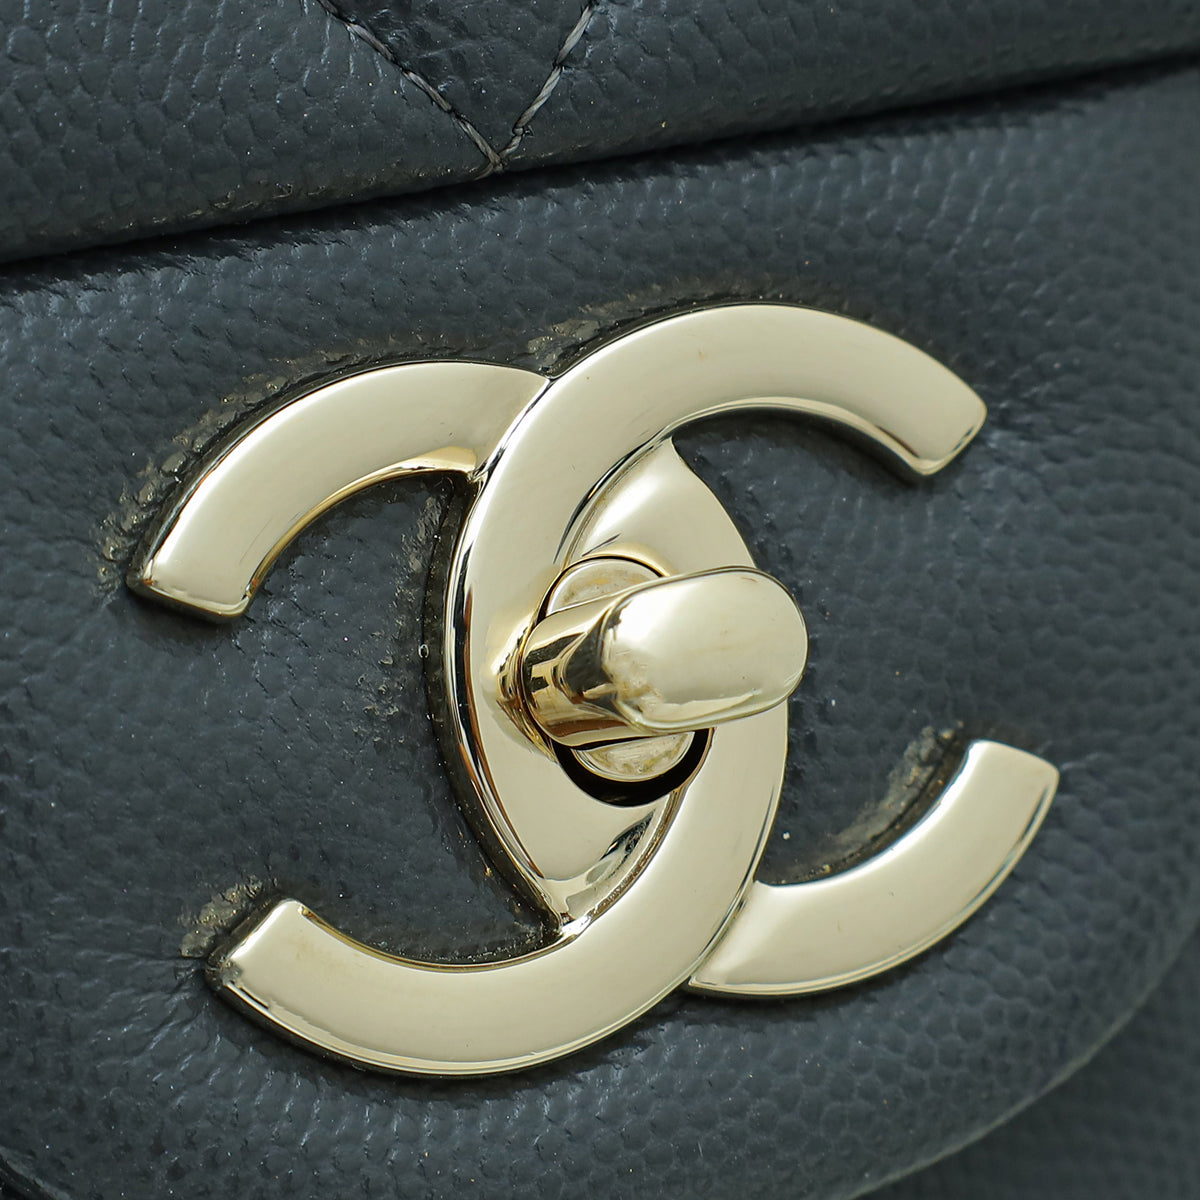 Chanel Grey CC Classic Double Flap Maxi Bag